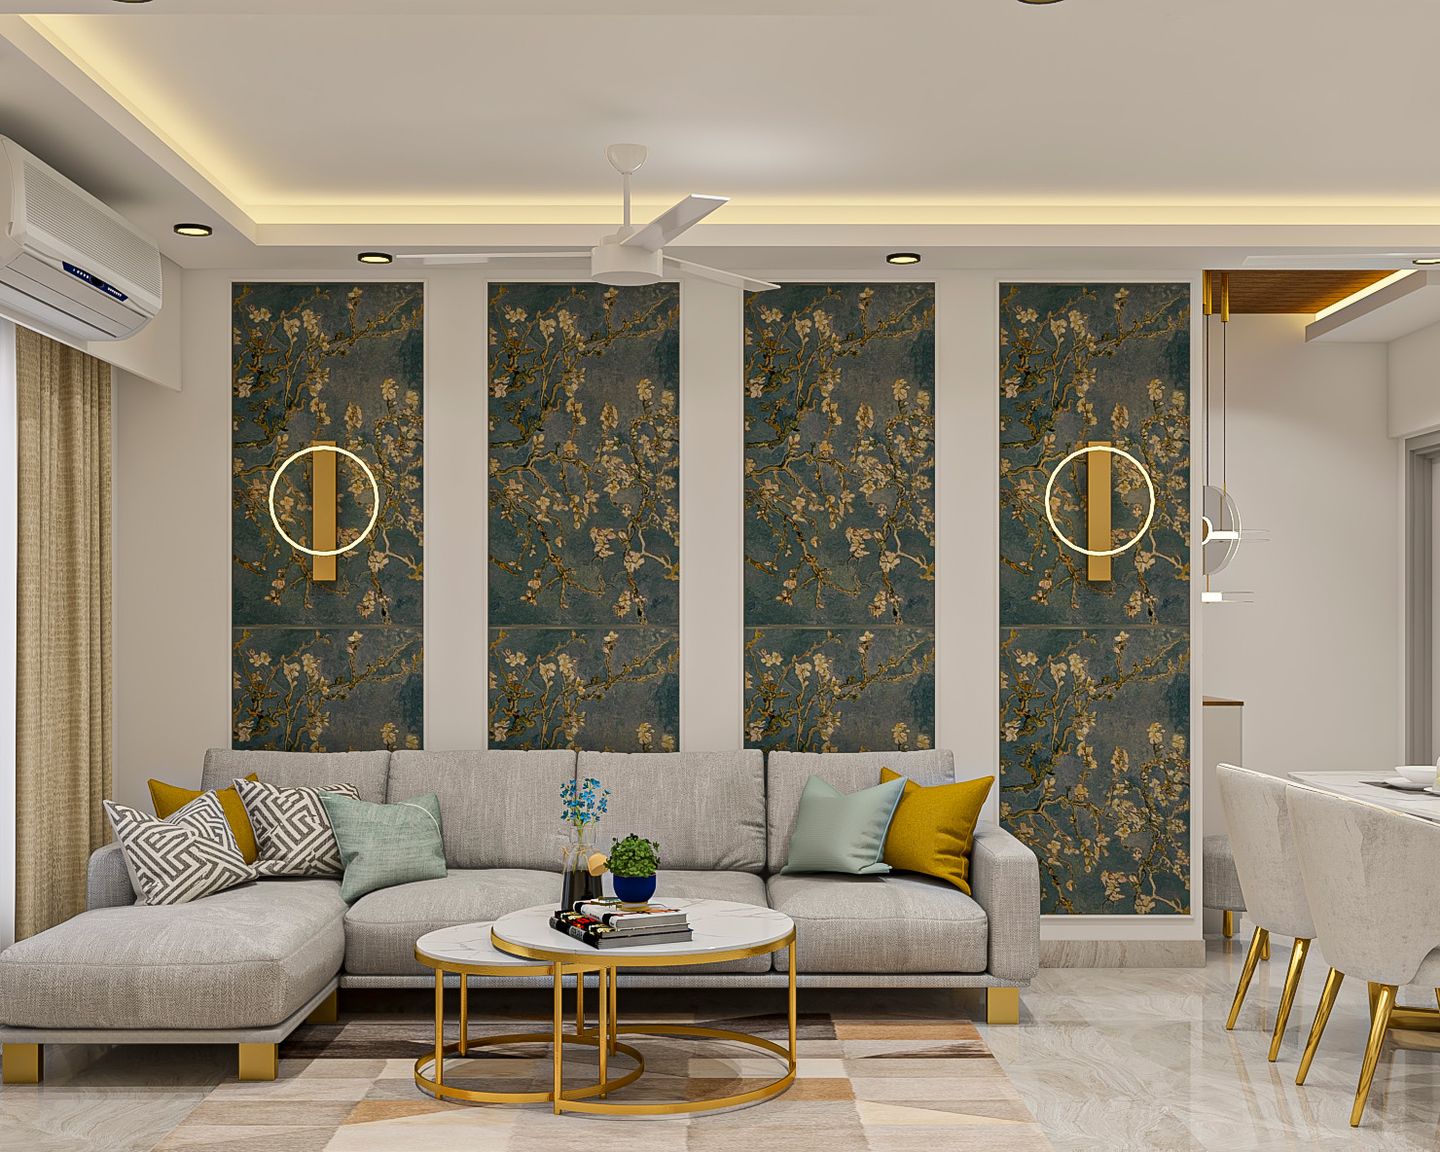 Living Room Design With Grey Floral Wallpaper - Livspace